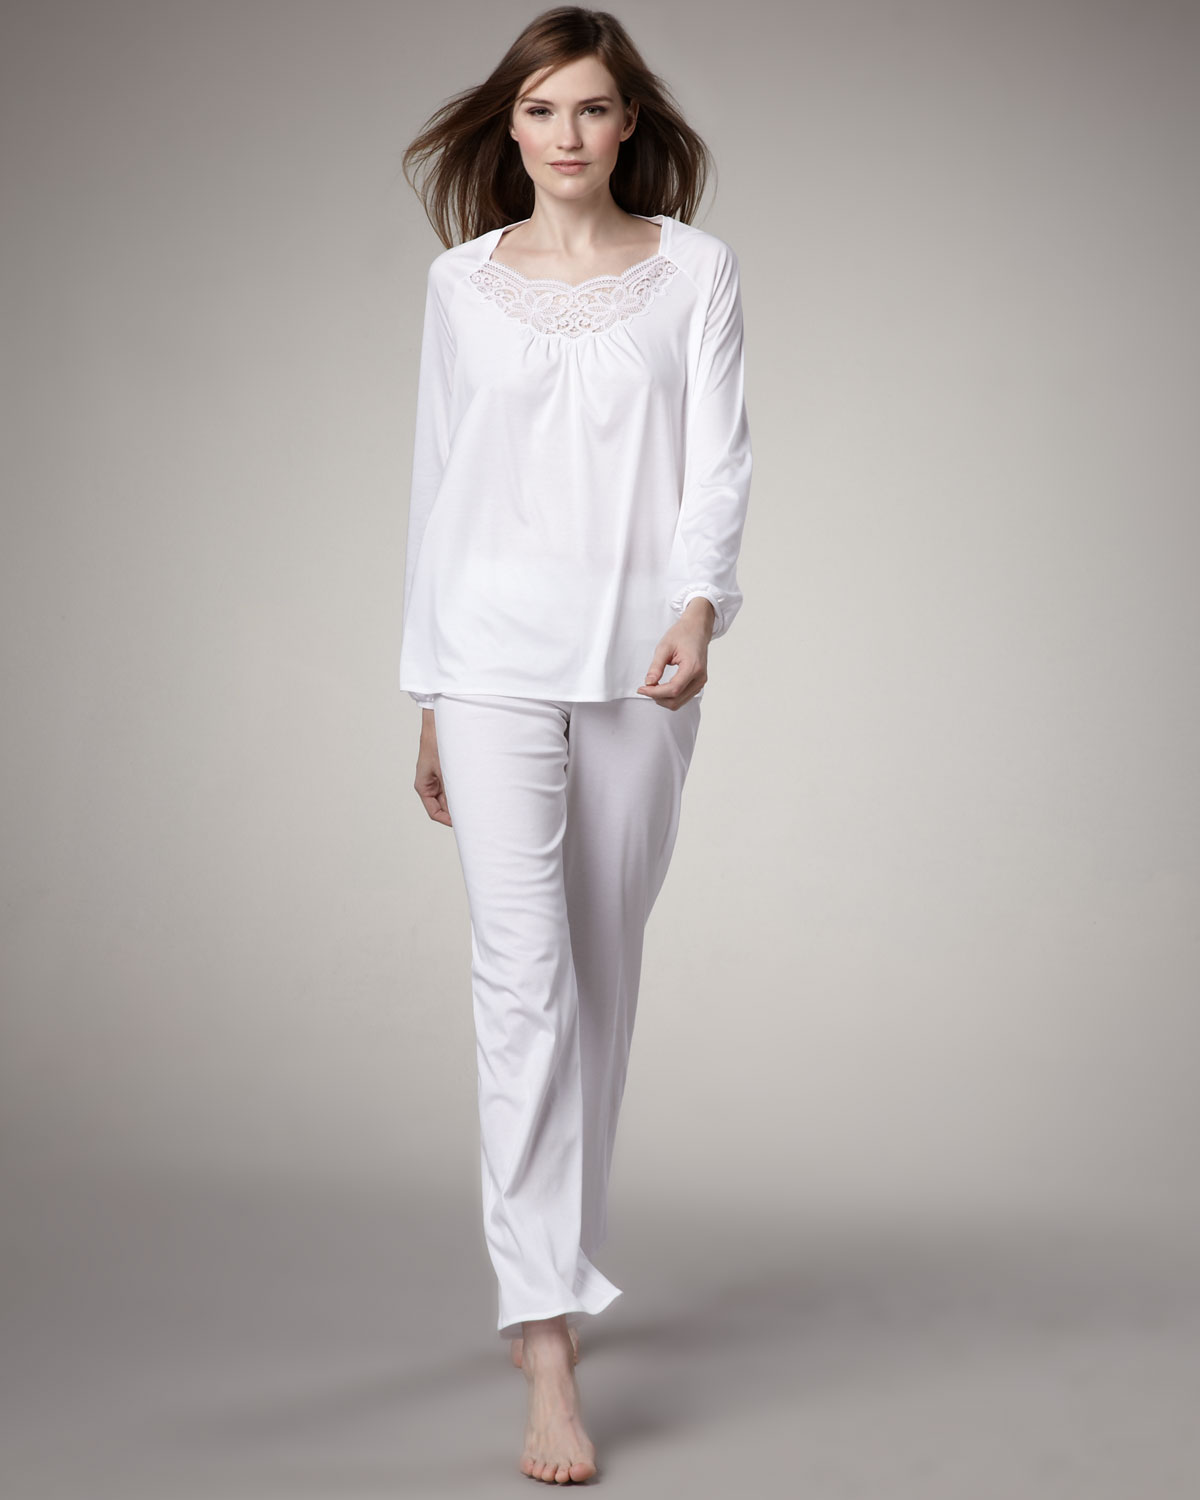 Lyst - Hanro Dalia Pajamas in White